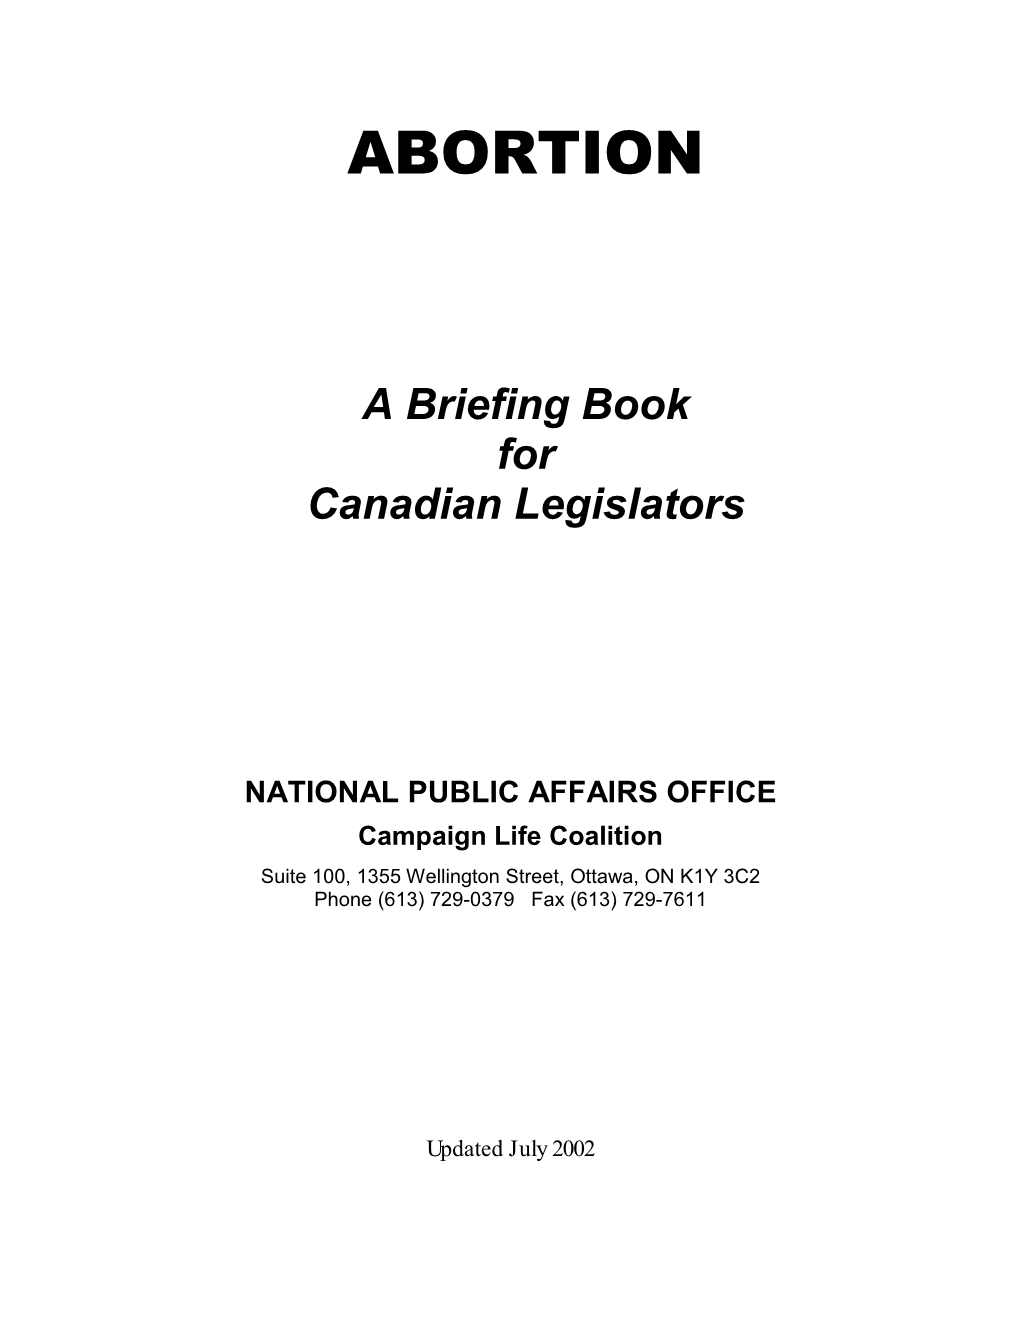 Abortion Briefing Book for Canadian Legislators